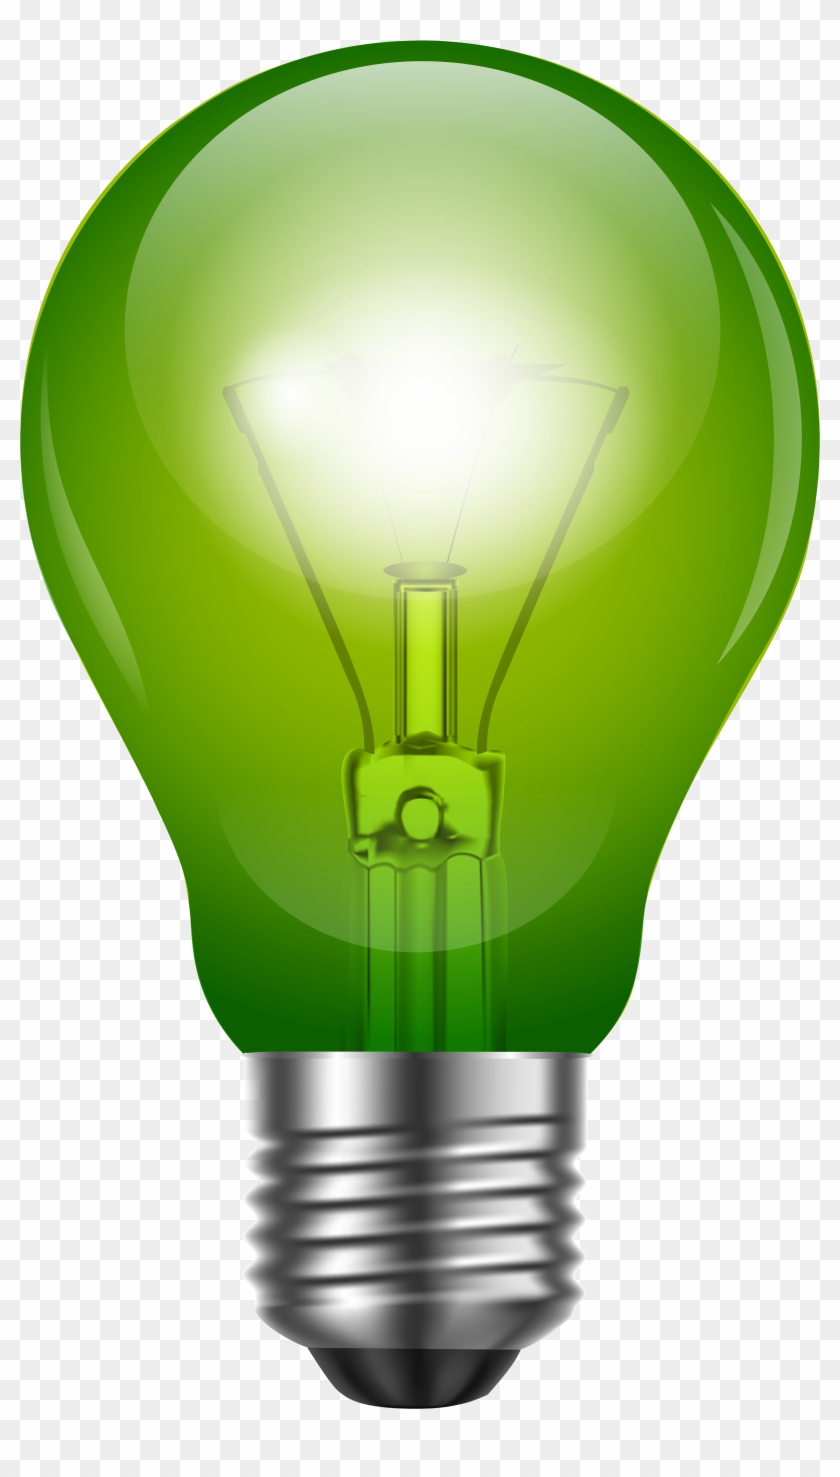 Green Light Bulb Png Clip Art - Green Light Bulb Png #47805